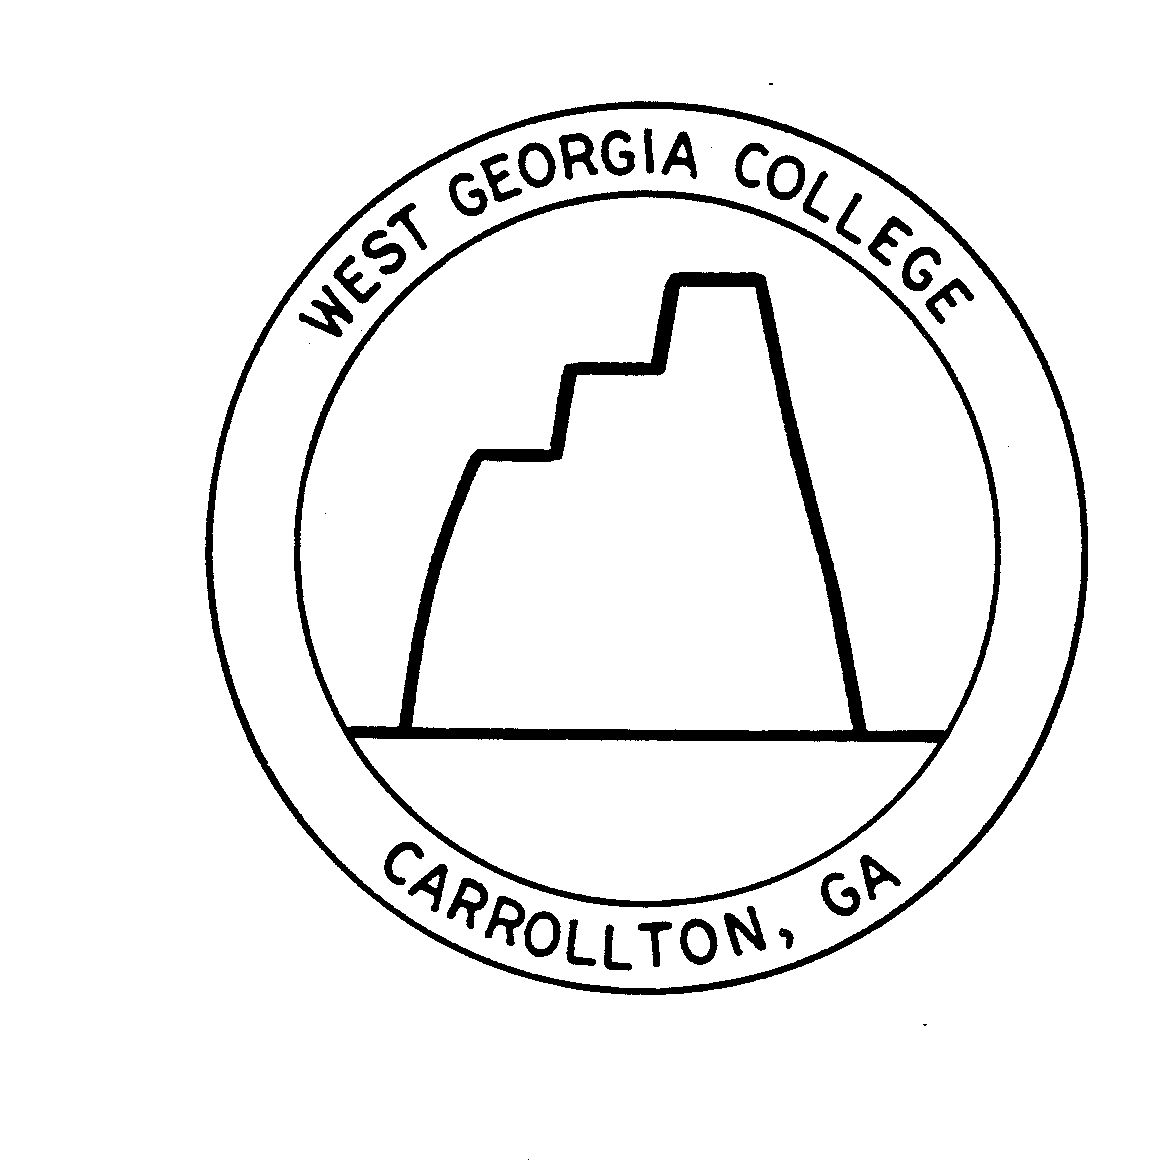  WEST GEORGIA COLLEGE CARROLLTON, GA